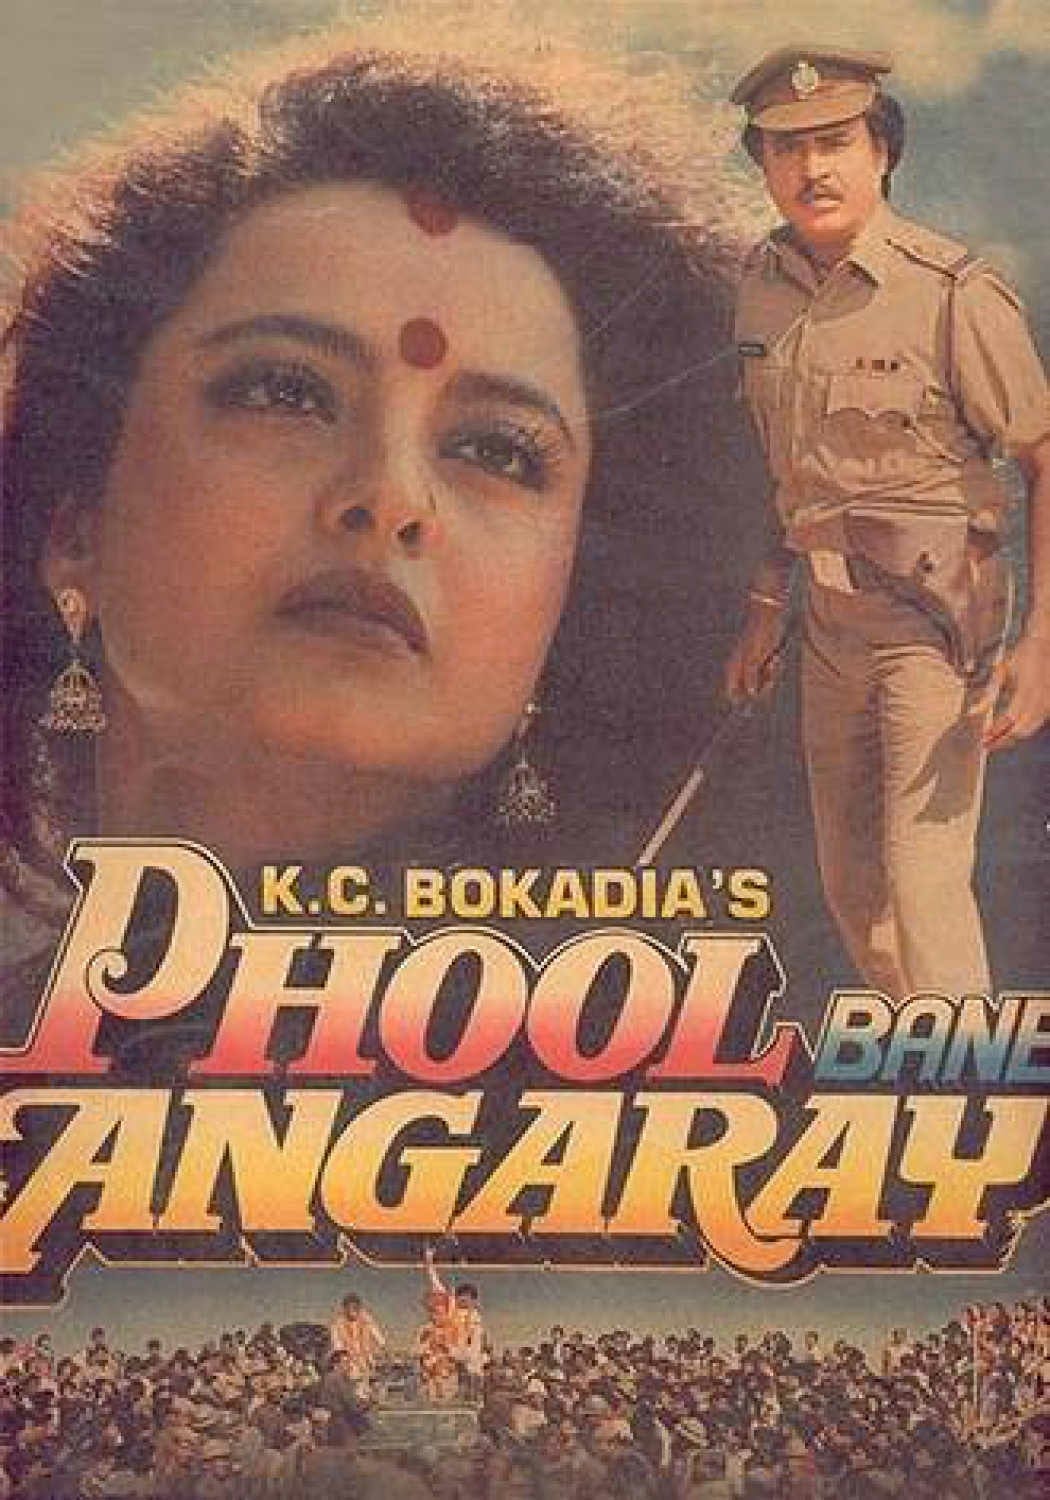 Poster for the movie "Phool Bane Angaray"